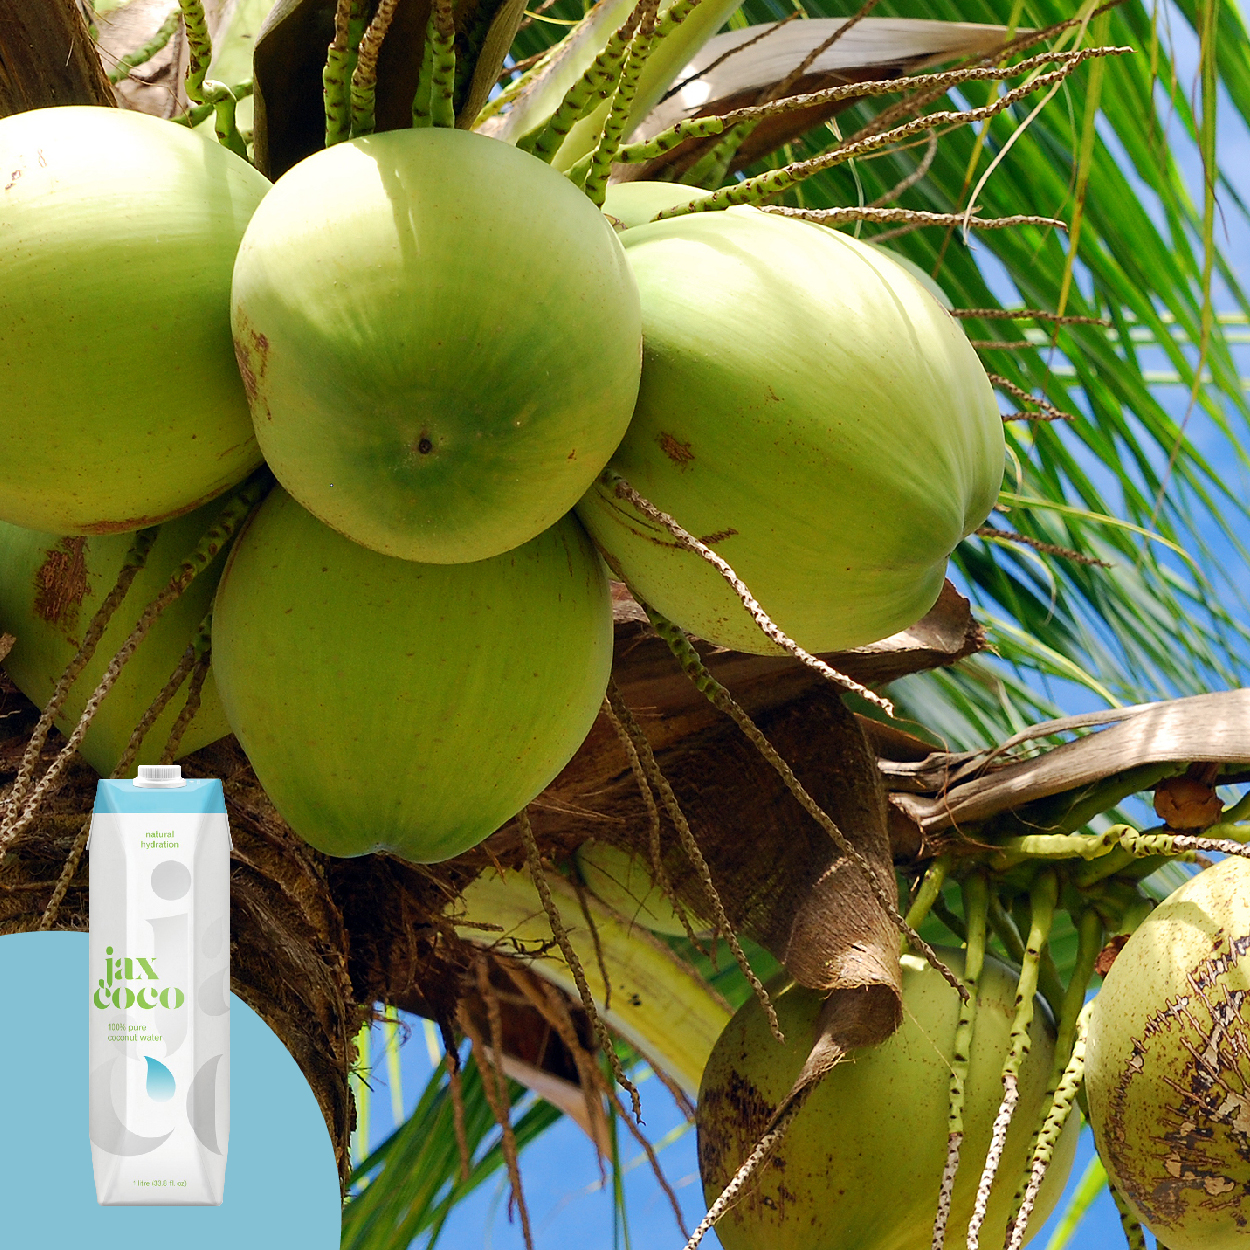 Jax Coco 100%原汁椰子水 採用純天然椰子汁 微過濾工藝與及高溫殺菌處理